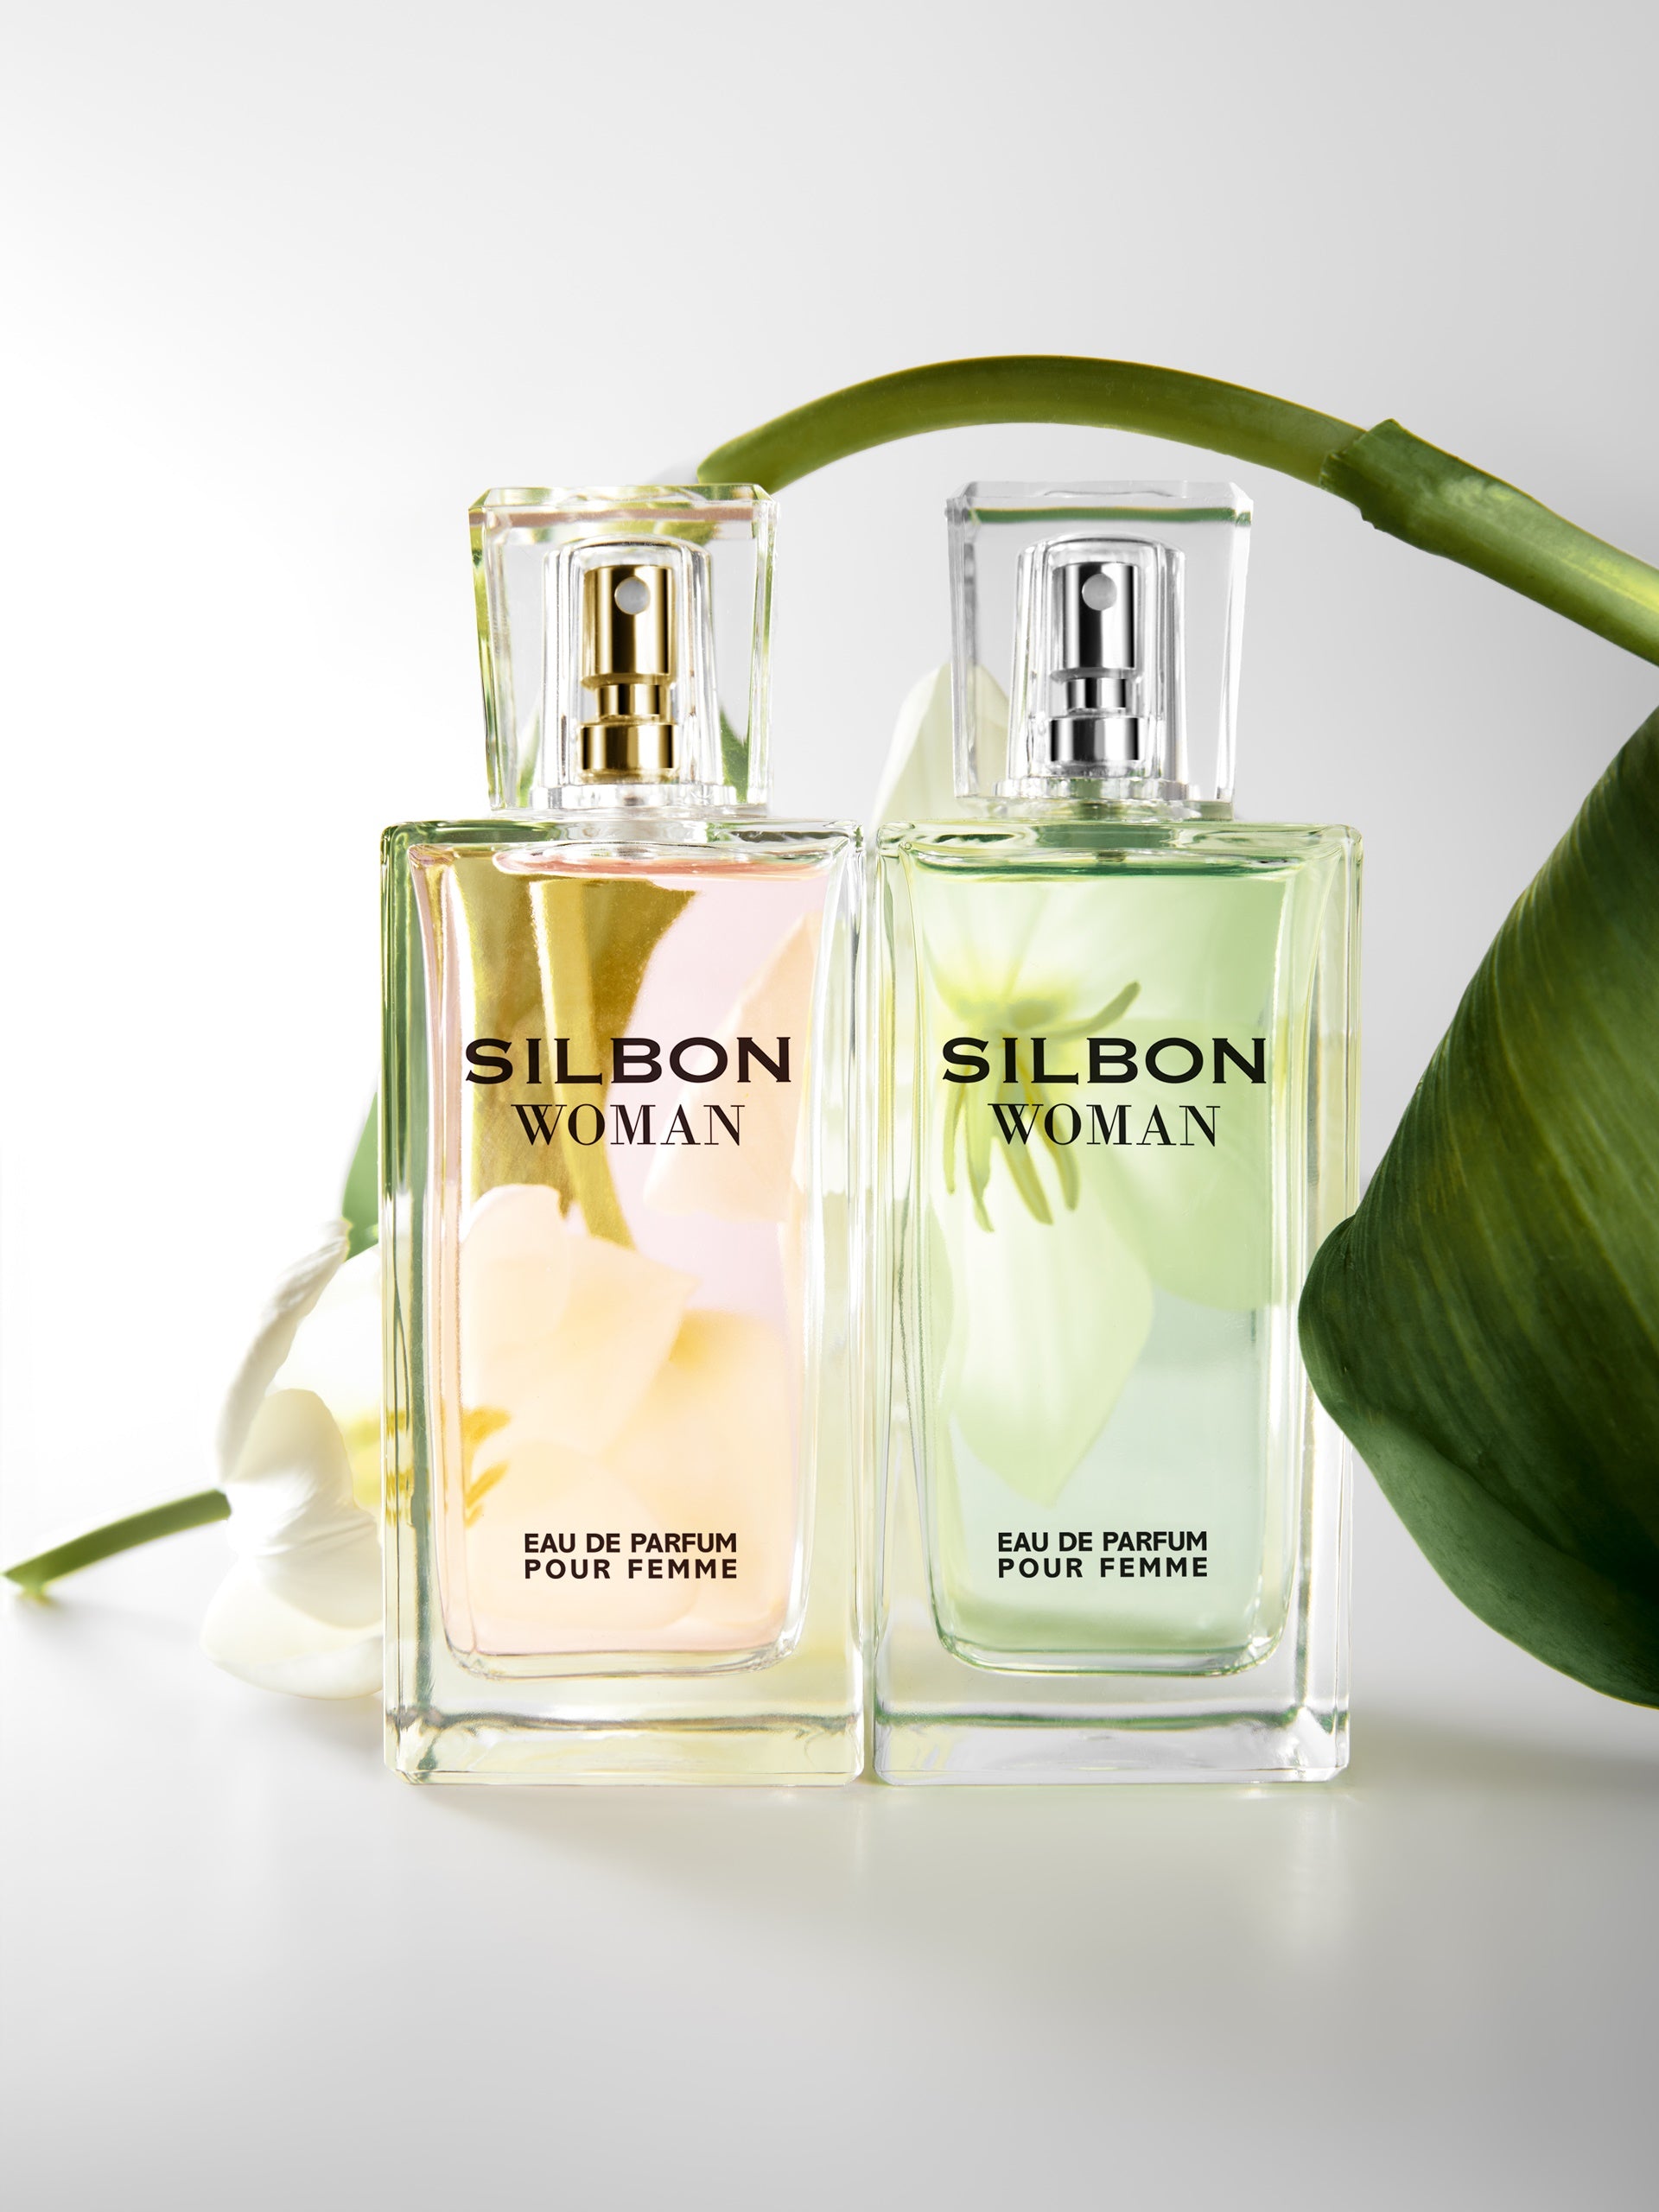 Silbon woman perfume